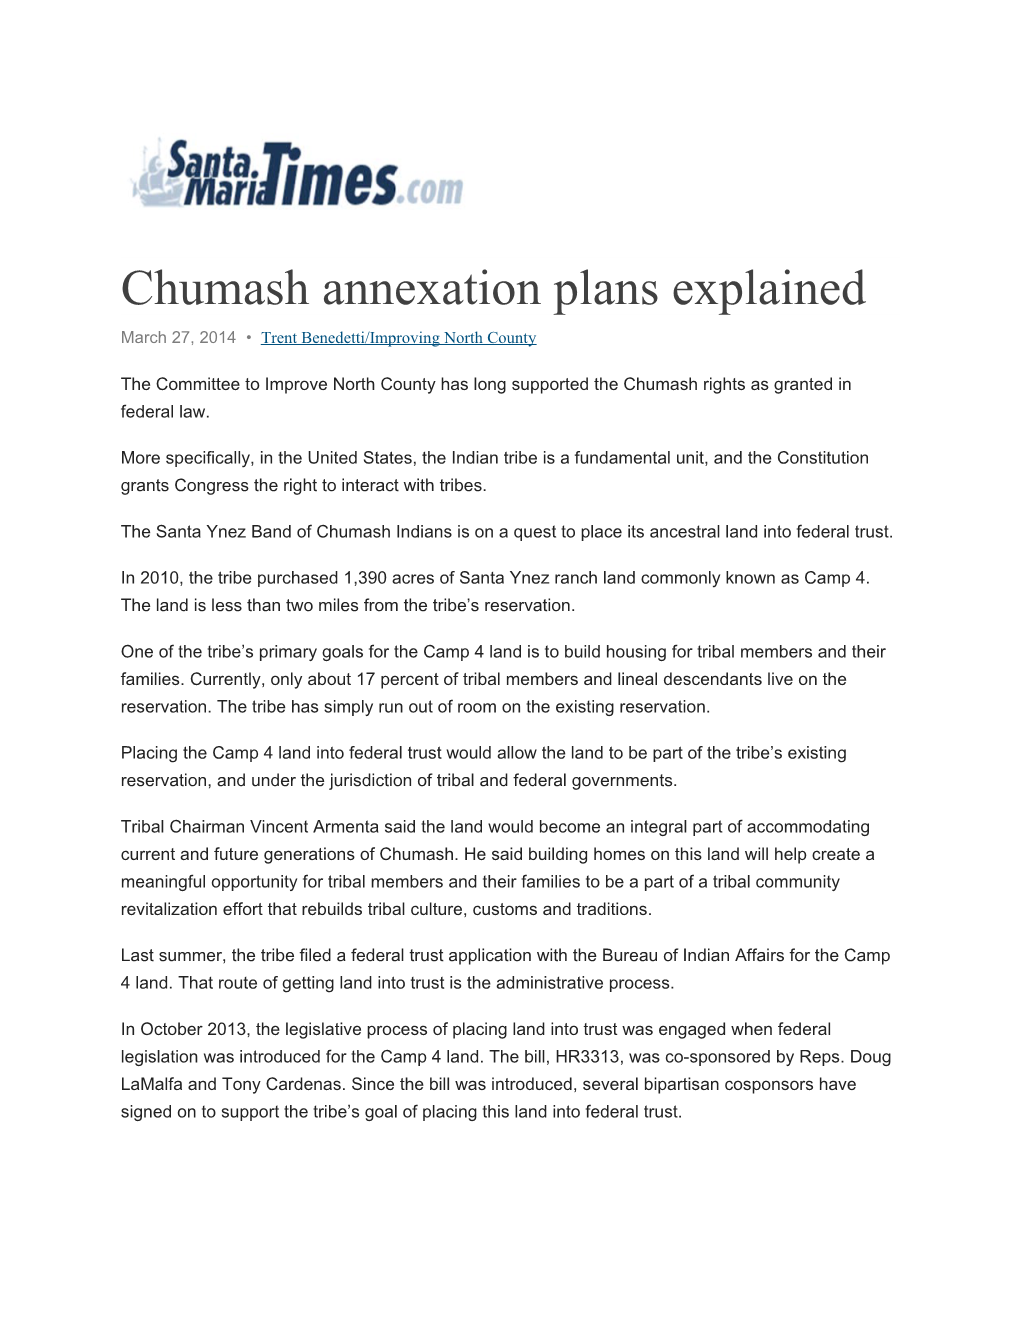 Chumash Annexation Plans Explained